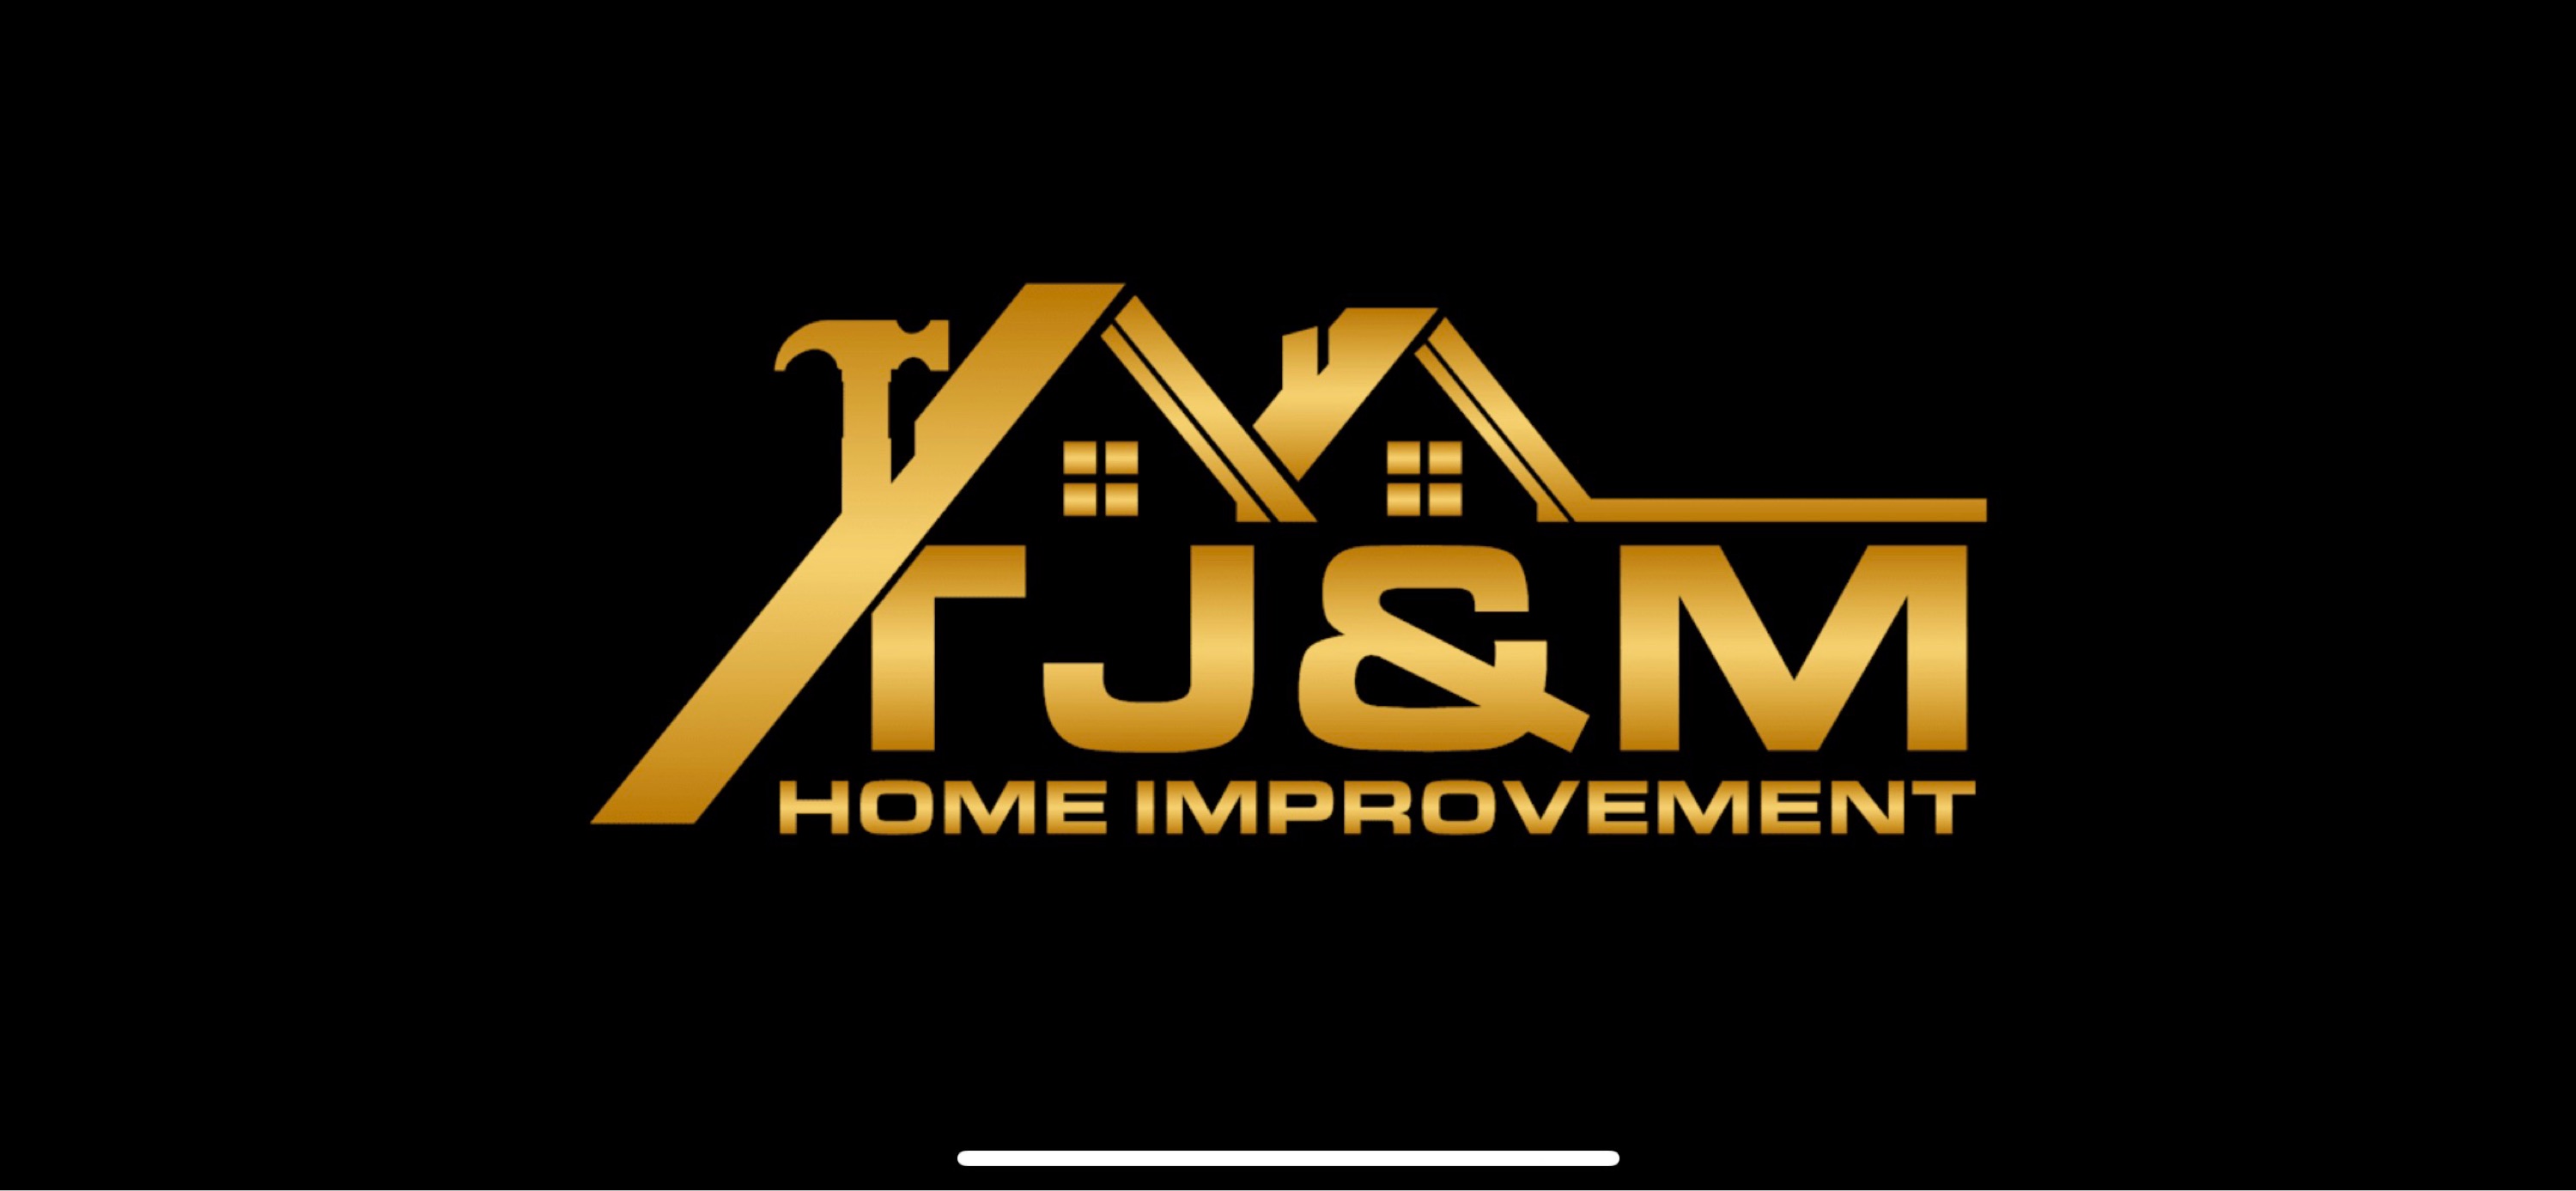 TJ & M Home Improvement Logo